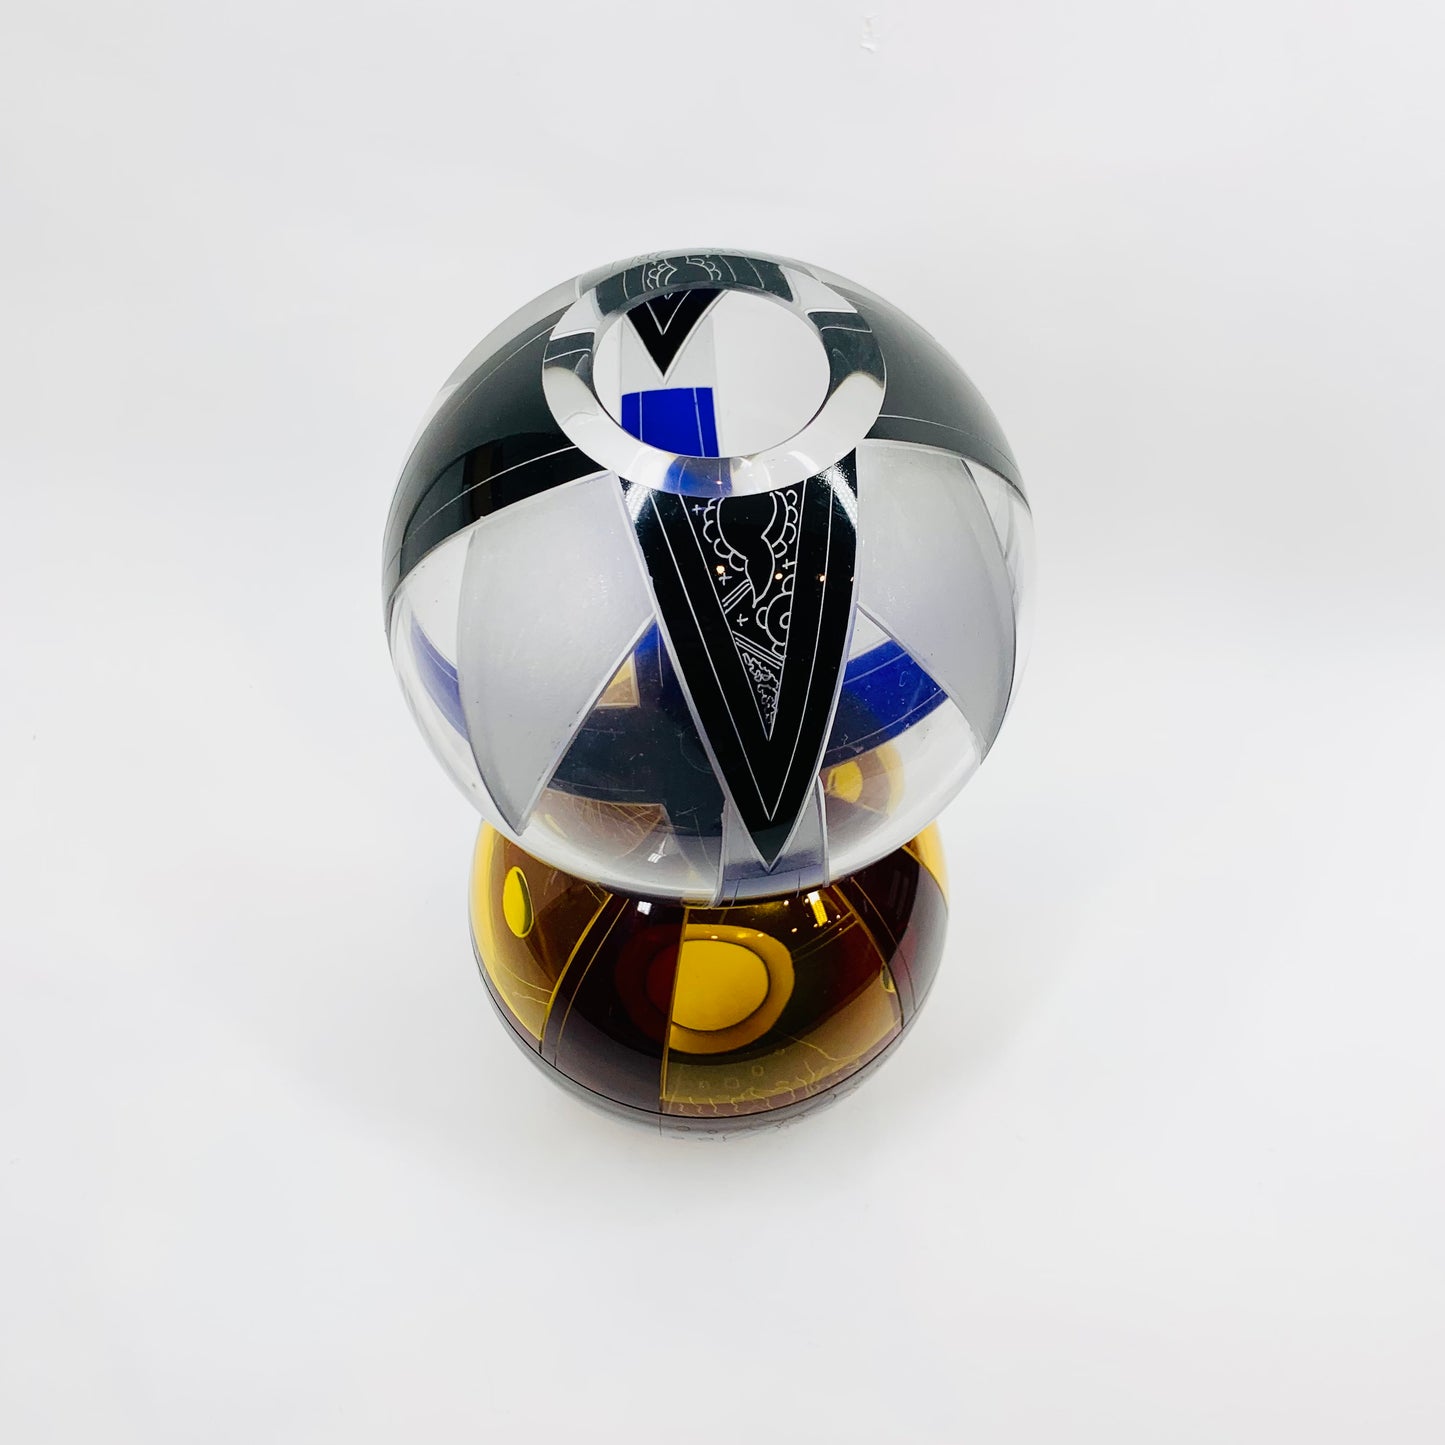 Antique Art Deco black and cobalt blue enamel globe glass posy vase by Karl Palda